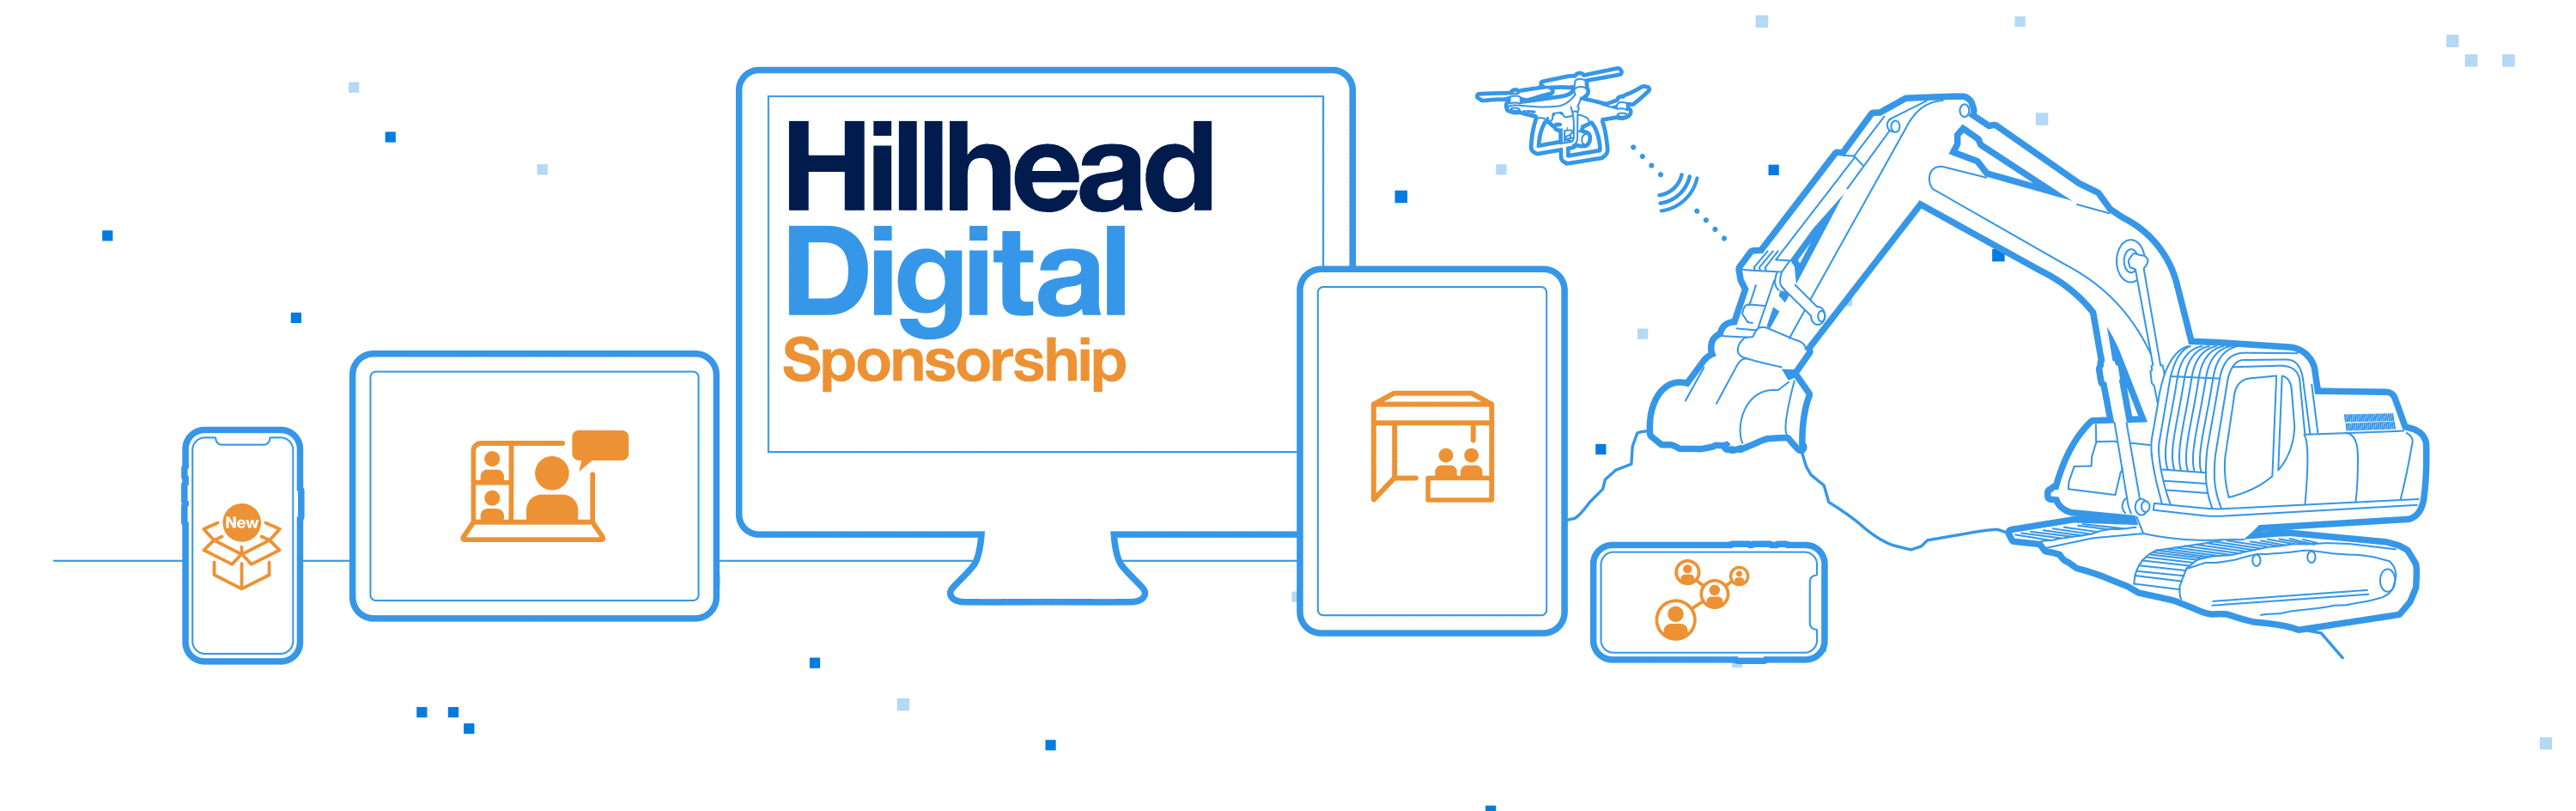 Hillhead Digital Sponsorship opportunities